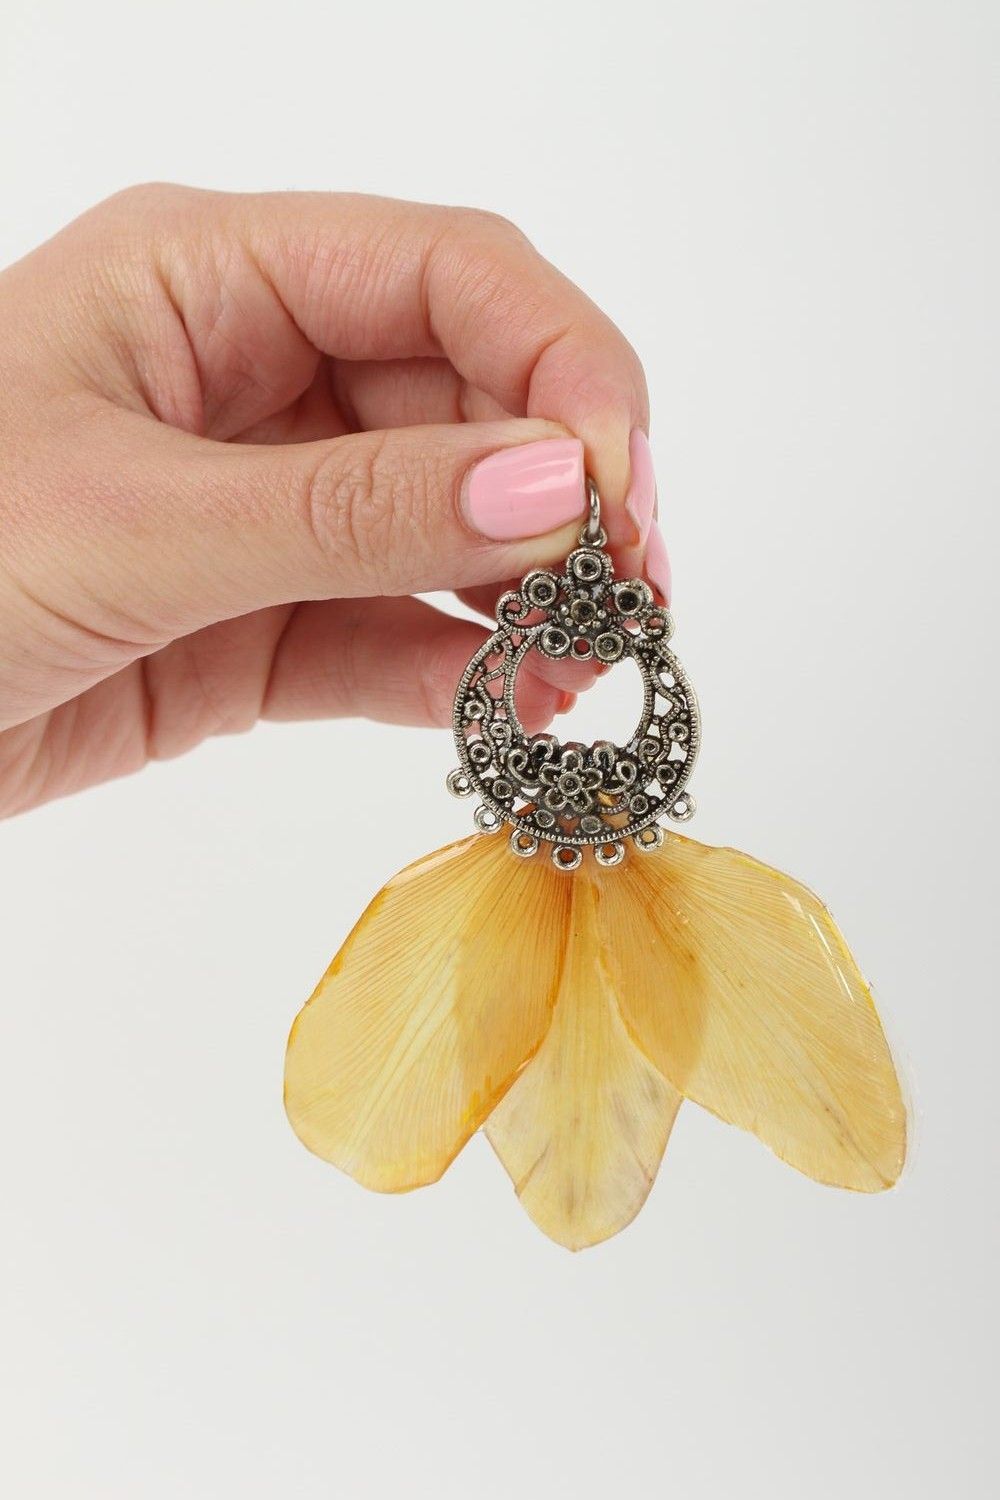 Handmade pendant unusual pendant designer accessory gift ideas epoxy jewelry photo 6